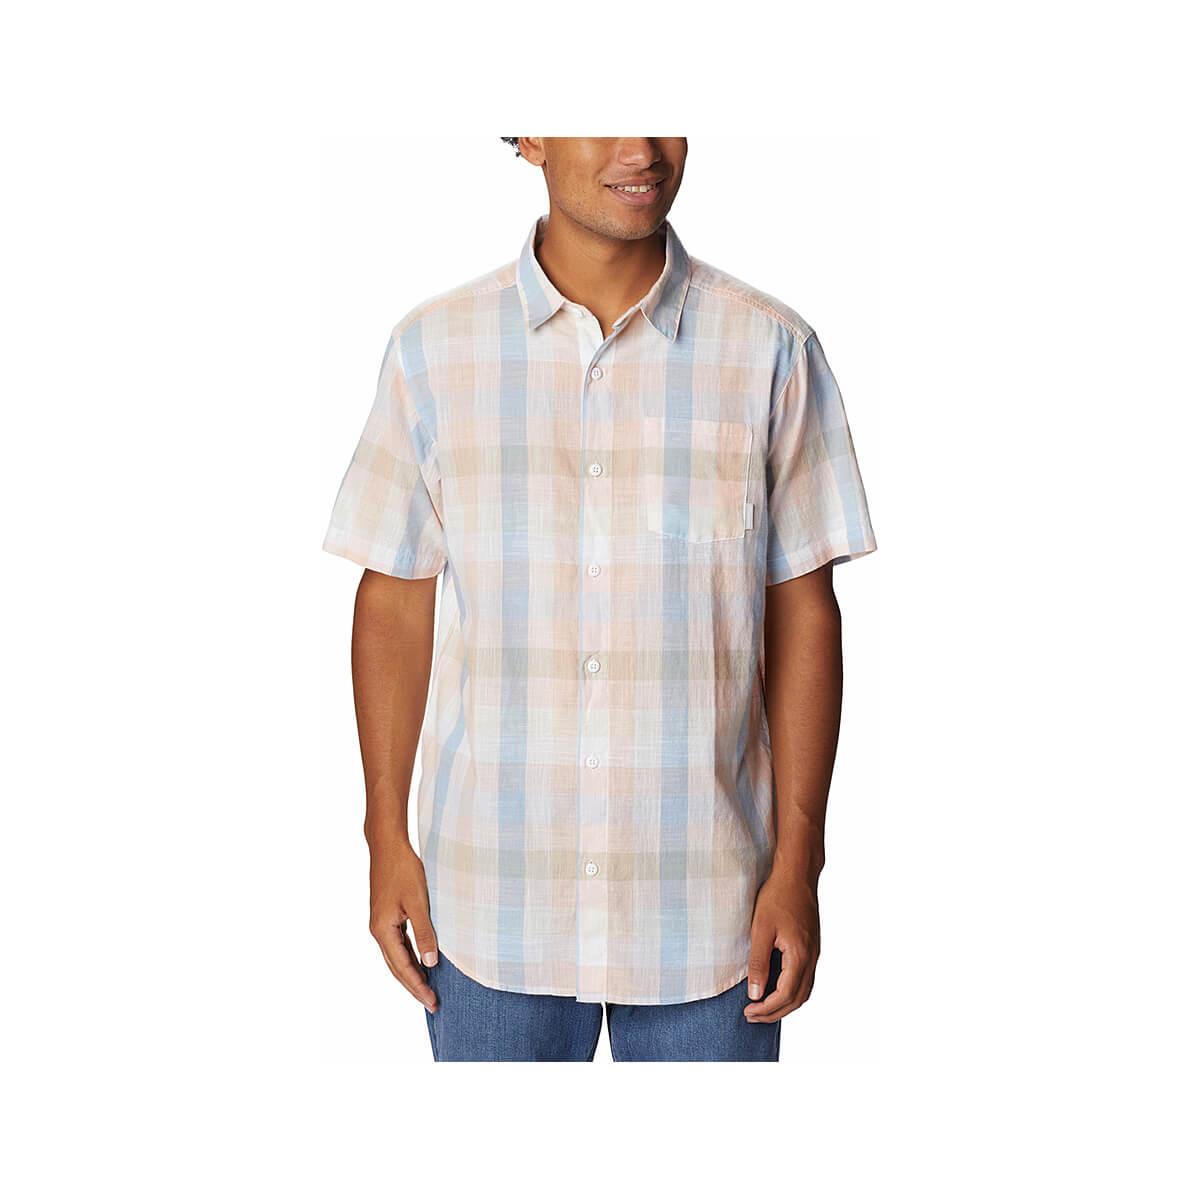  Men's Under Exposure Yarn- Dye Short Sleeve Shirt